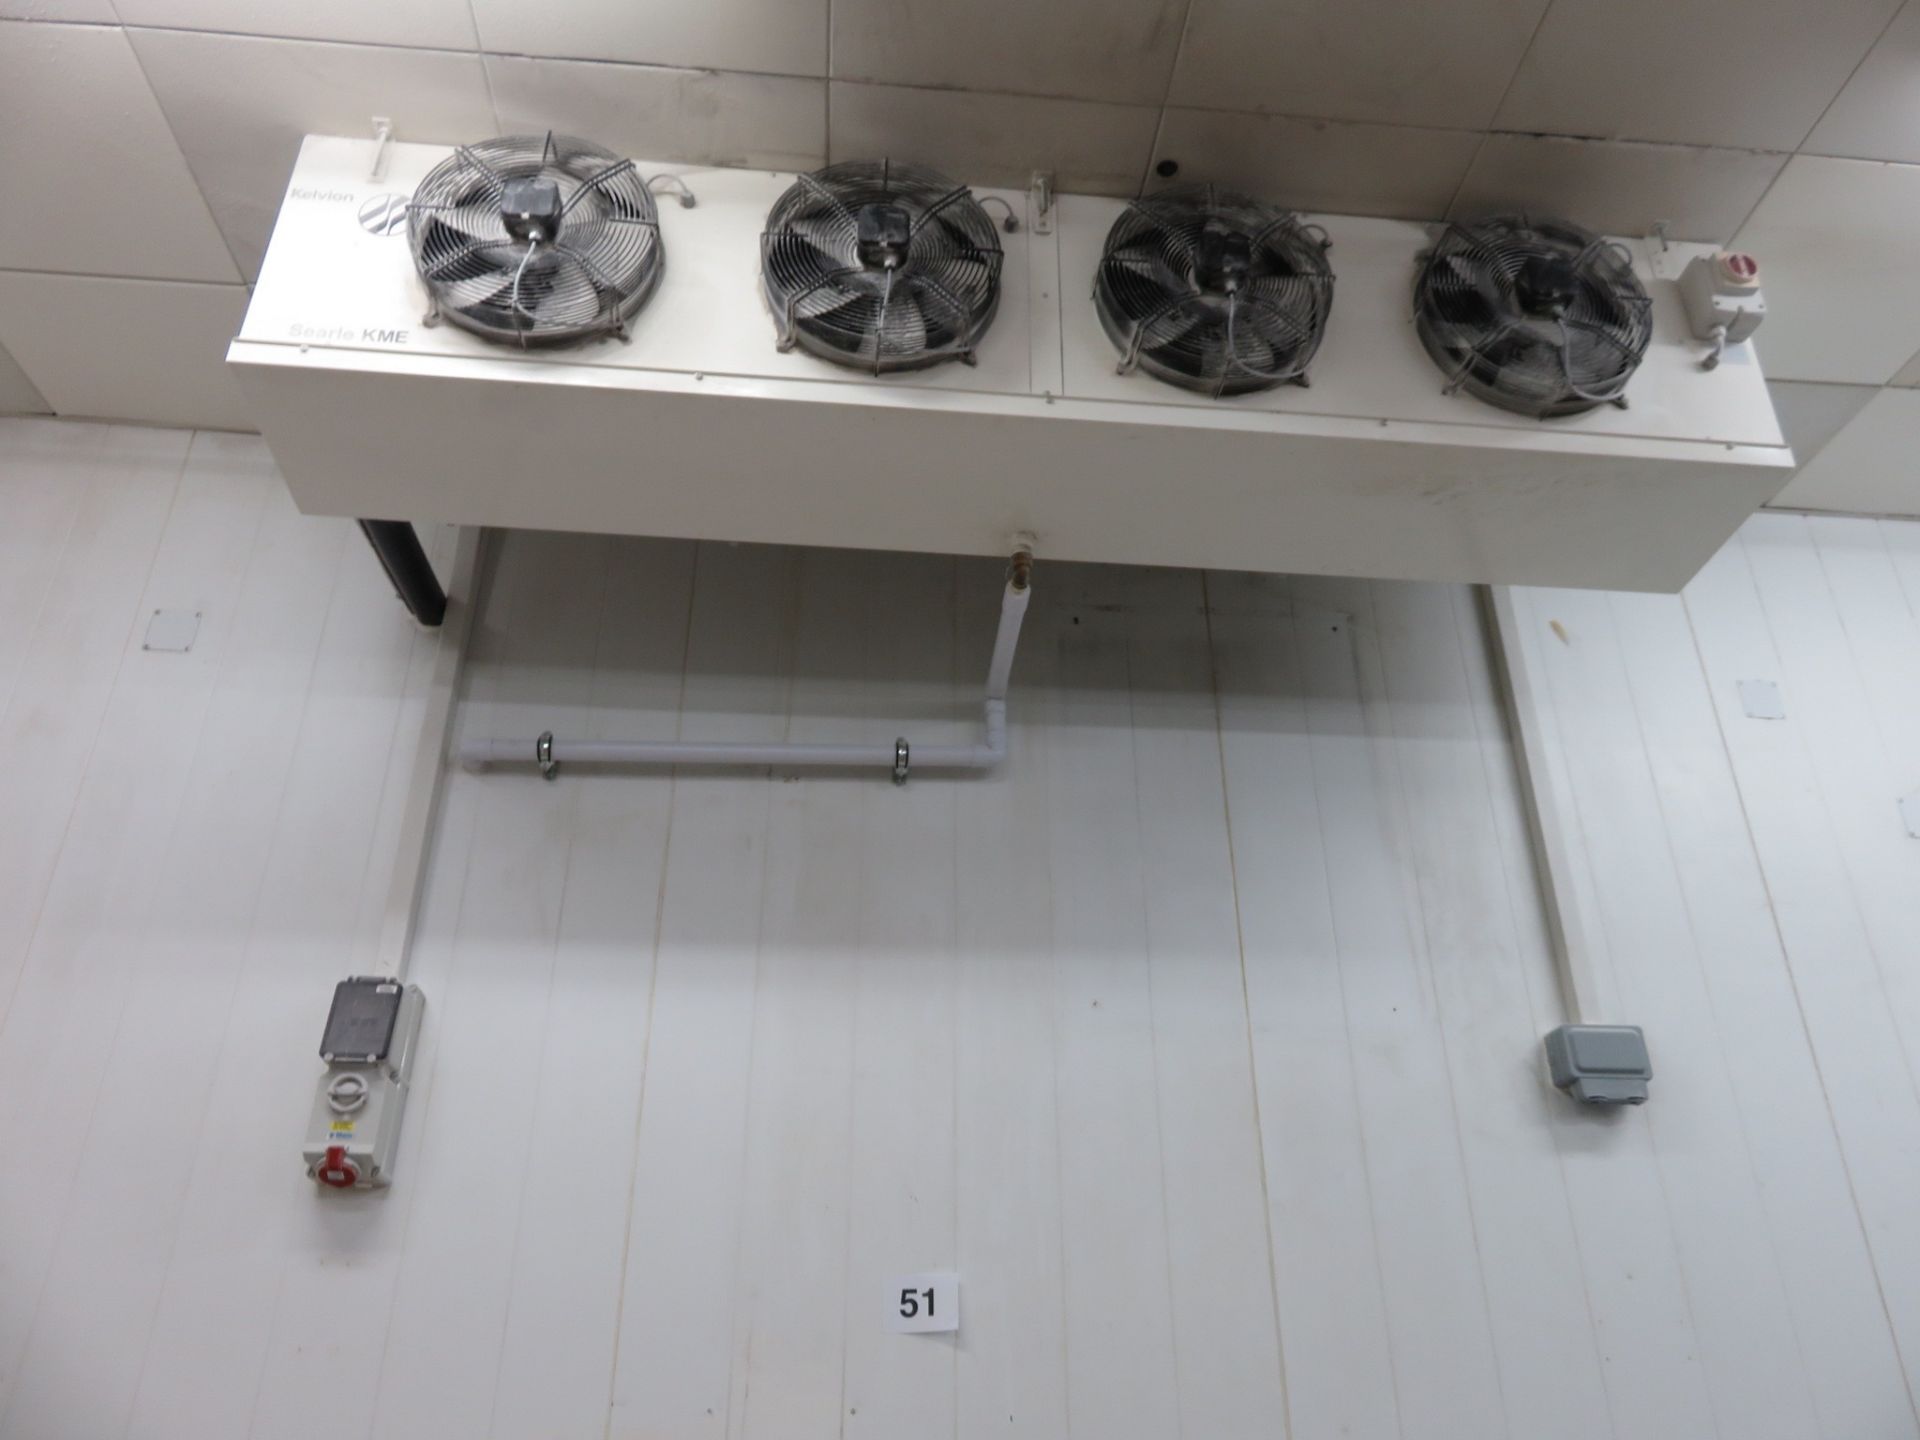 5 x Searle KME 4 Fan Evaporators. lift out charge £350